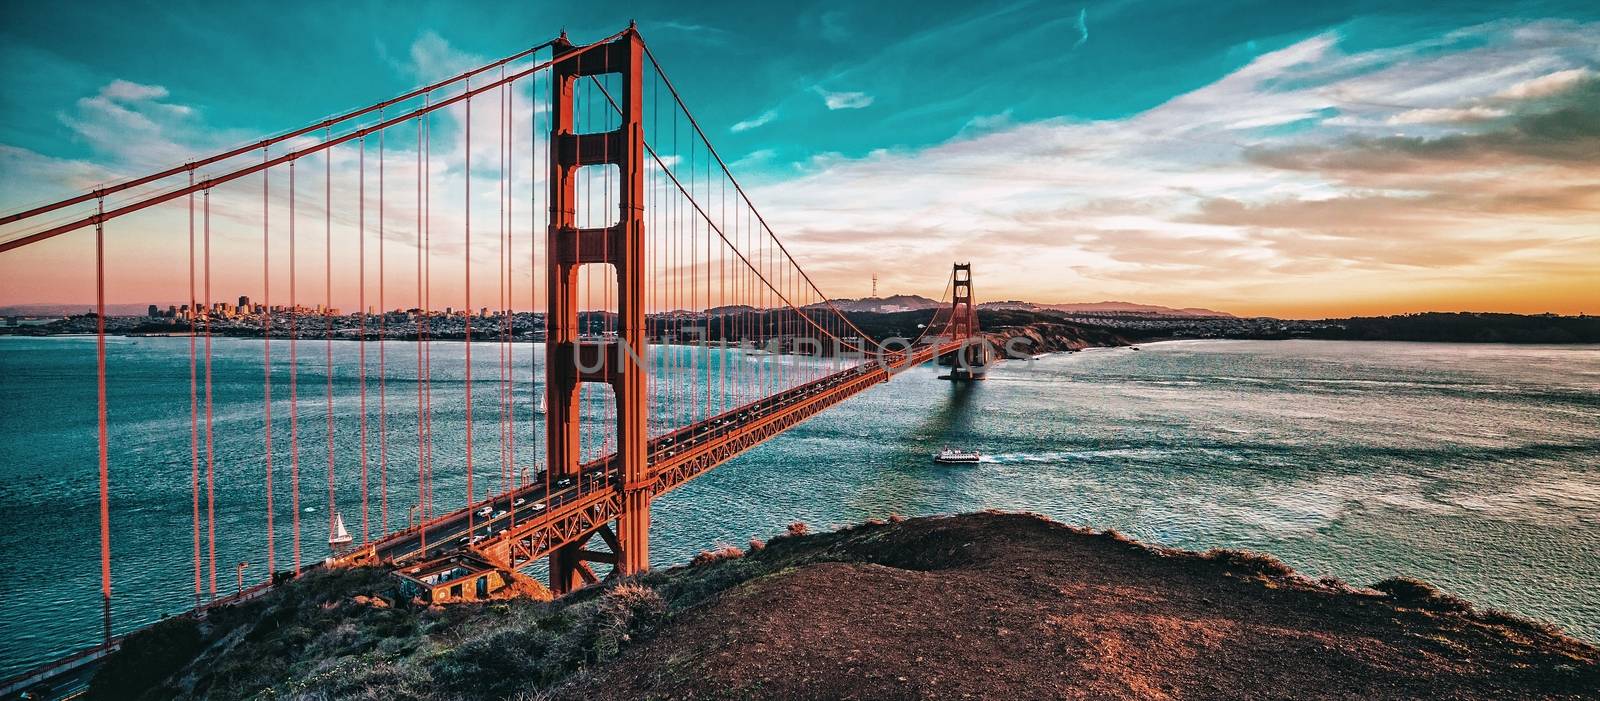 Golden Gate bridge view by JRTBurr